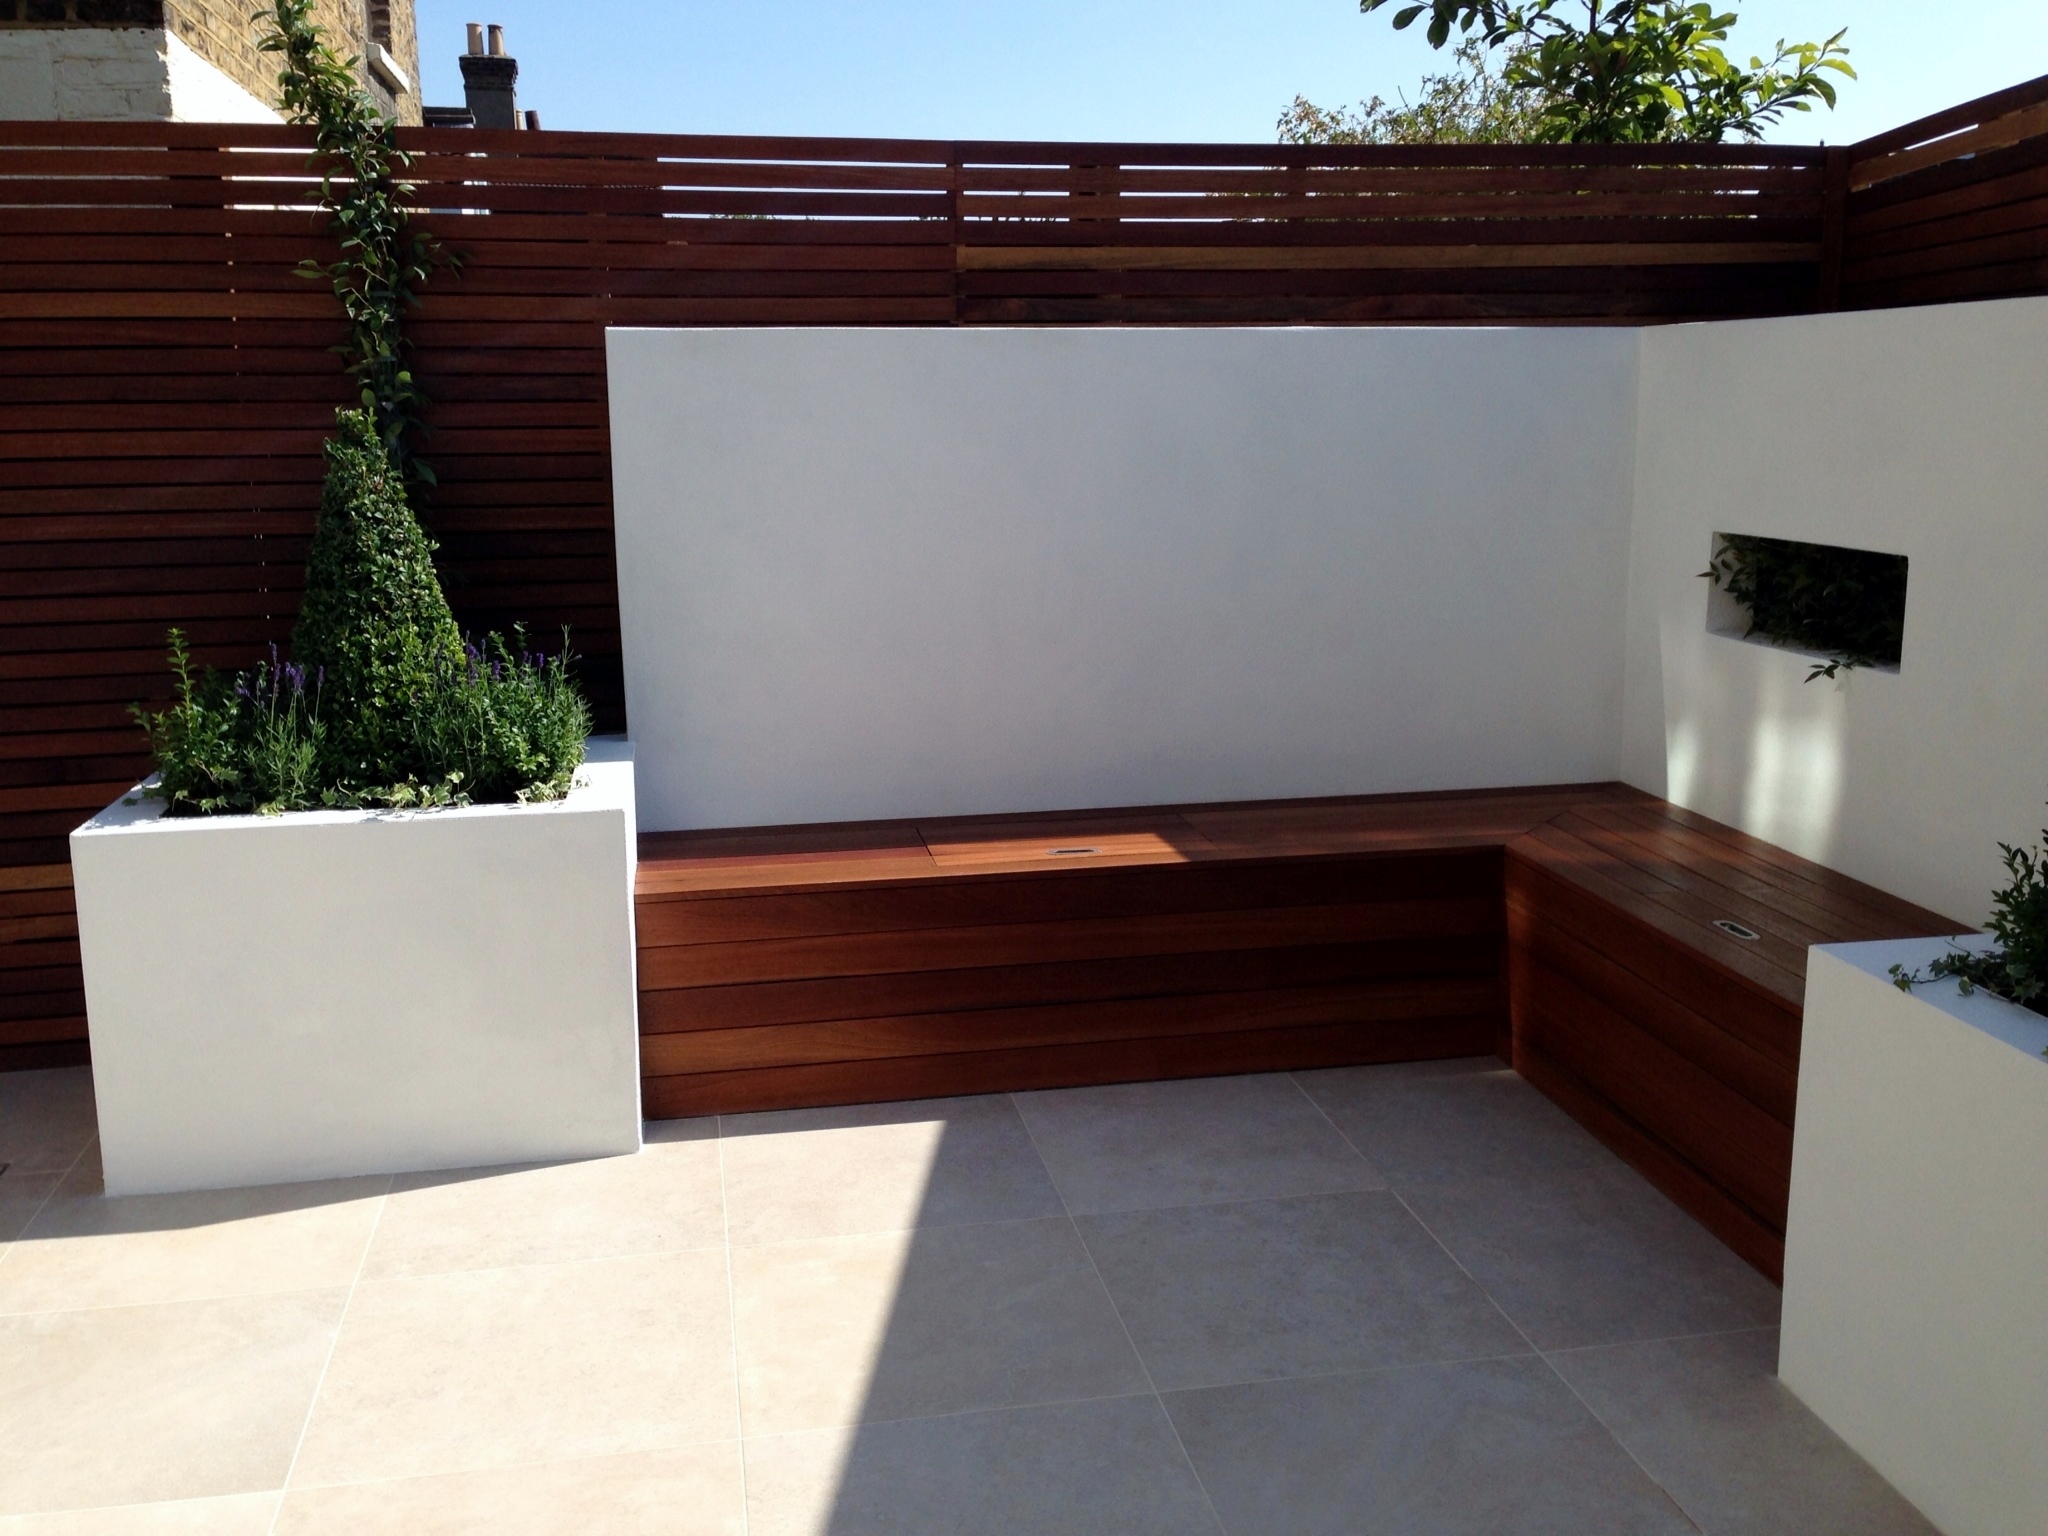 small modern minimalist low maintenance garden dulwich london block wall bench hardwood screen trellis privacy screen architectural planting (13)